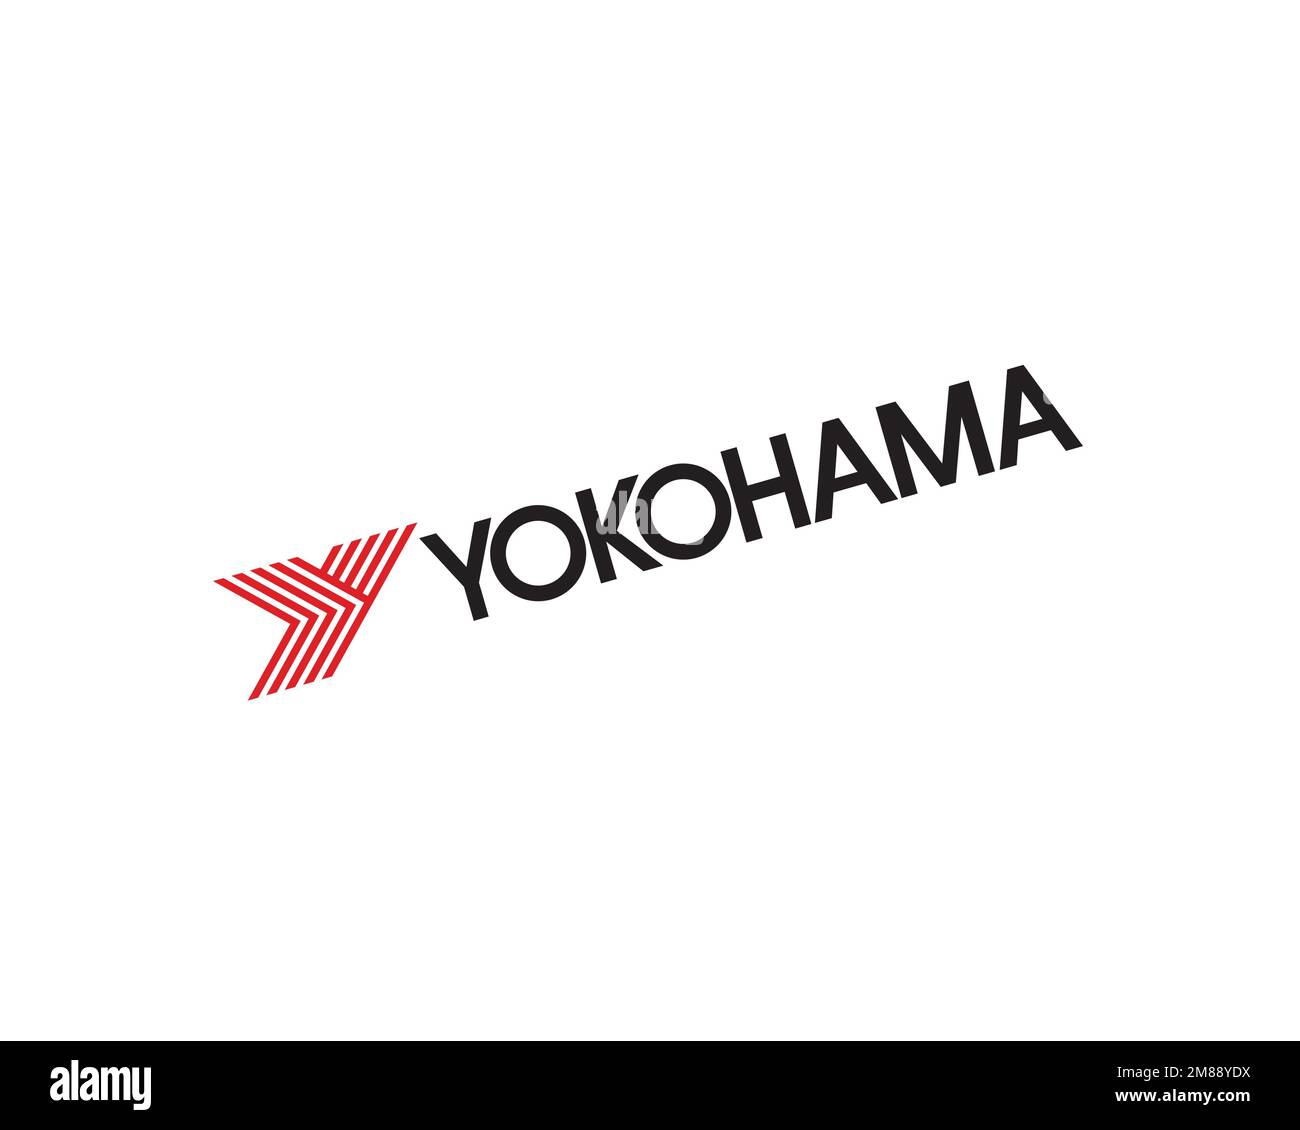 Yokohama Rubber Company, rotated logo, white background Stock Photo - Alamy